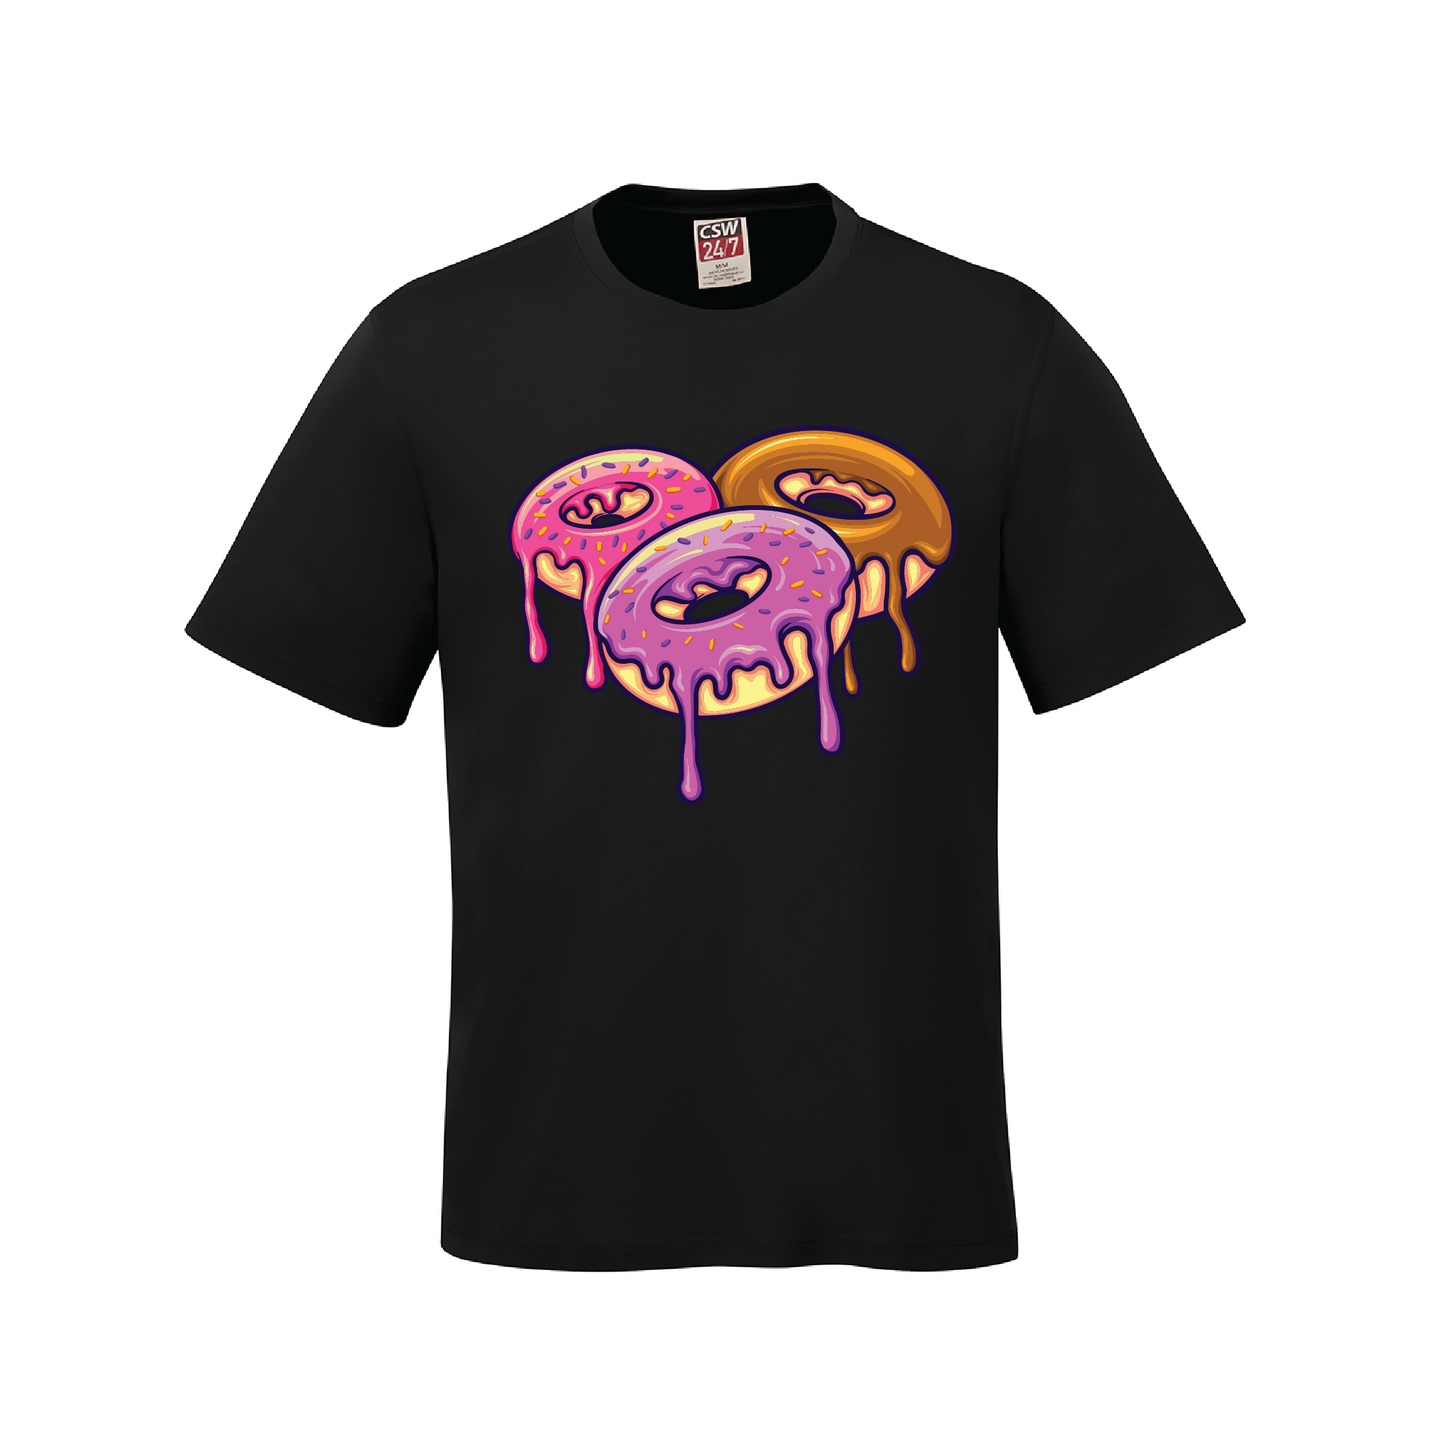 Glazed Donuts T-Shirt